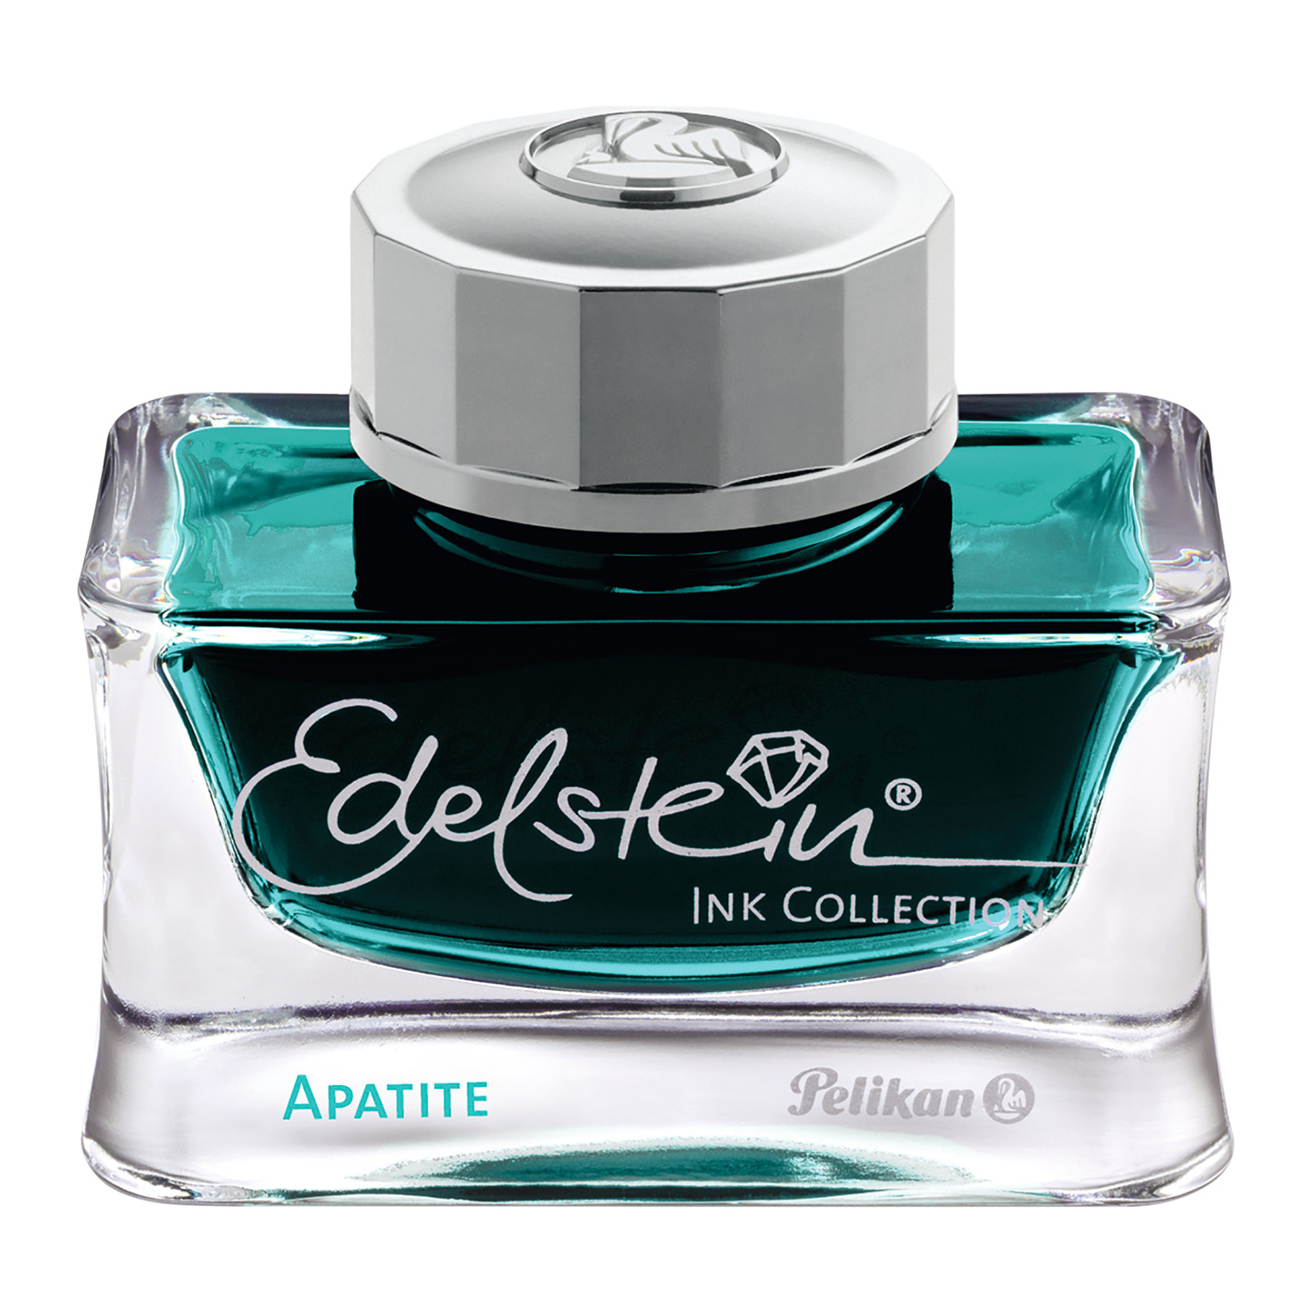 Pelikan Edelstein® Ink Apatite (Turquoise) 50 ml